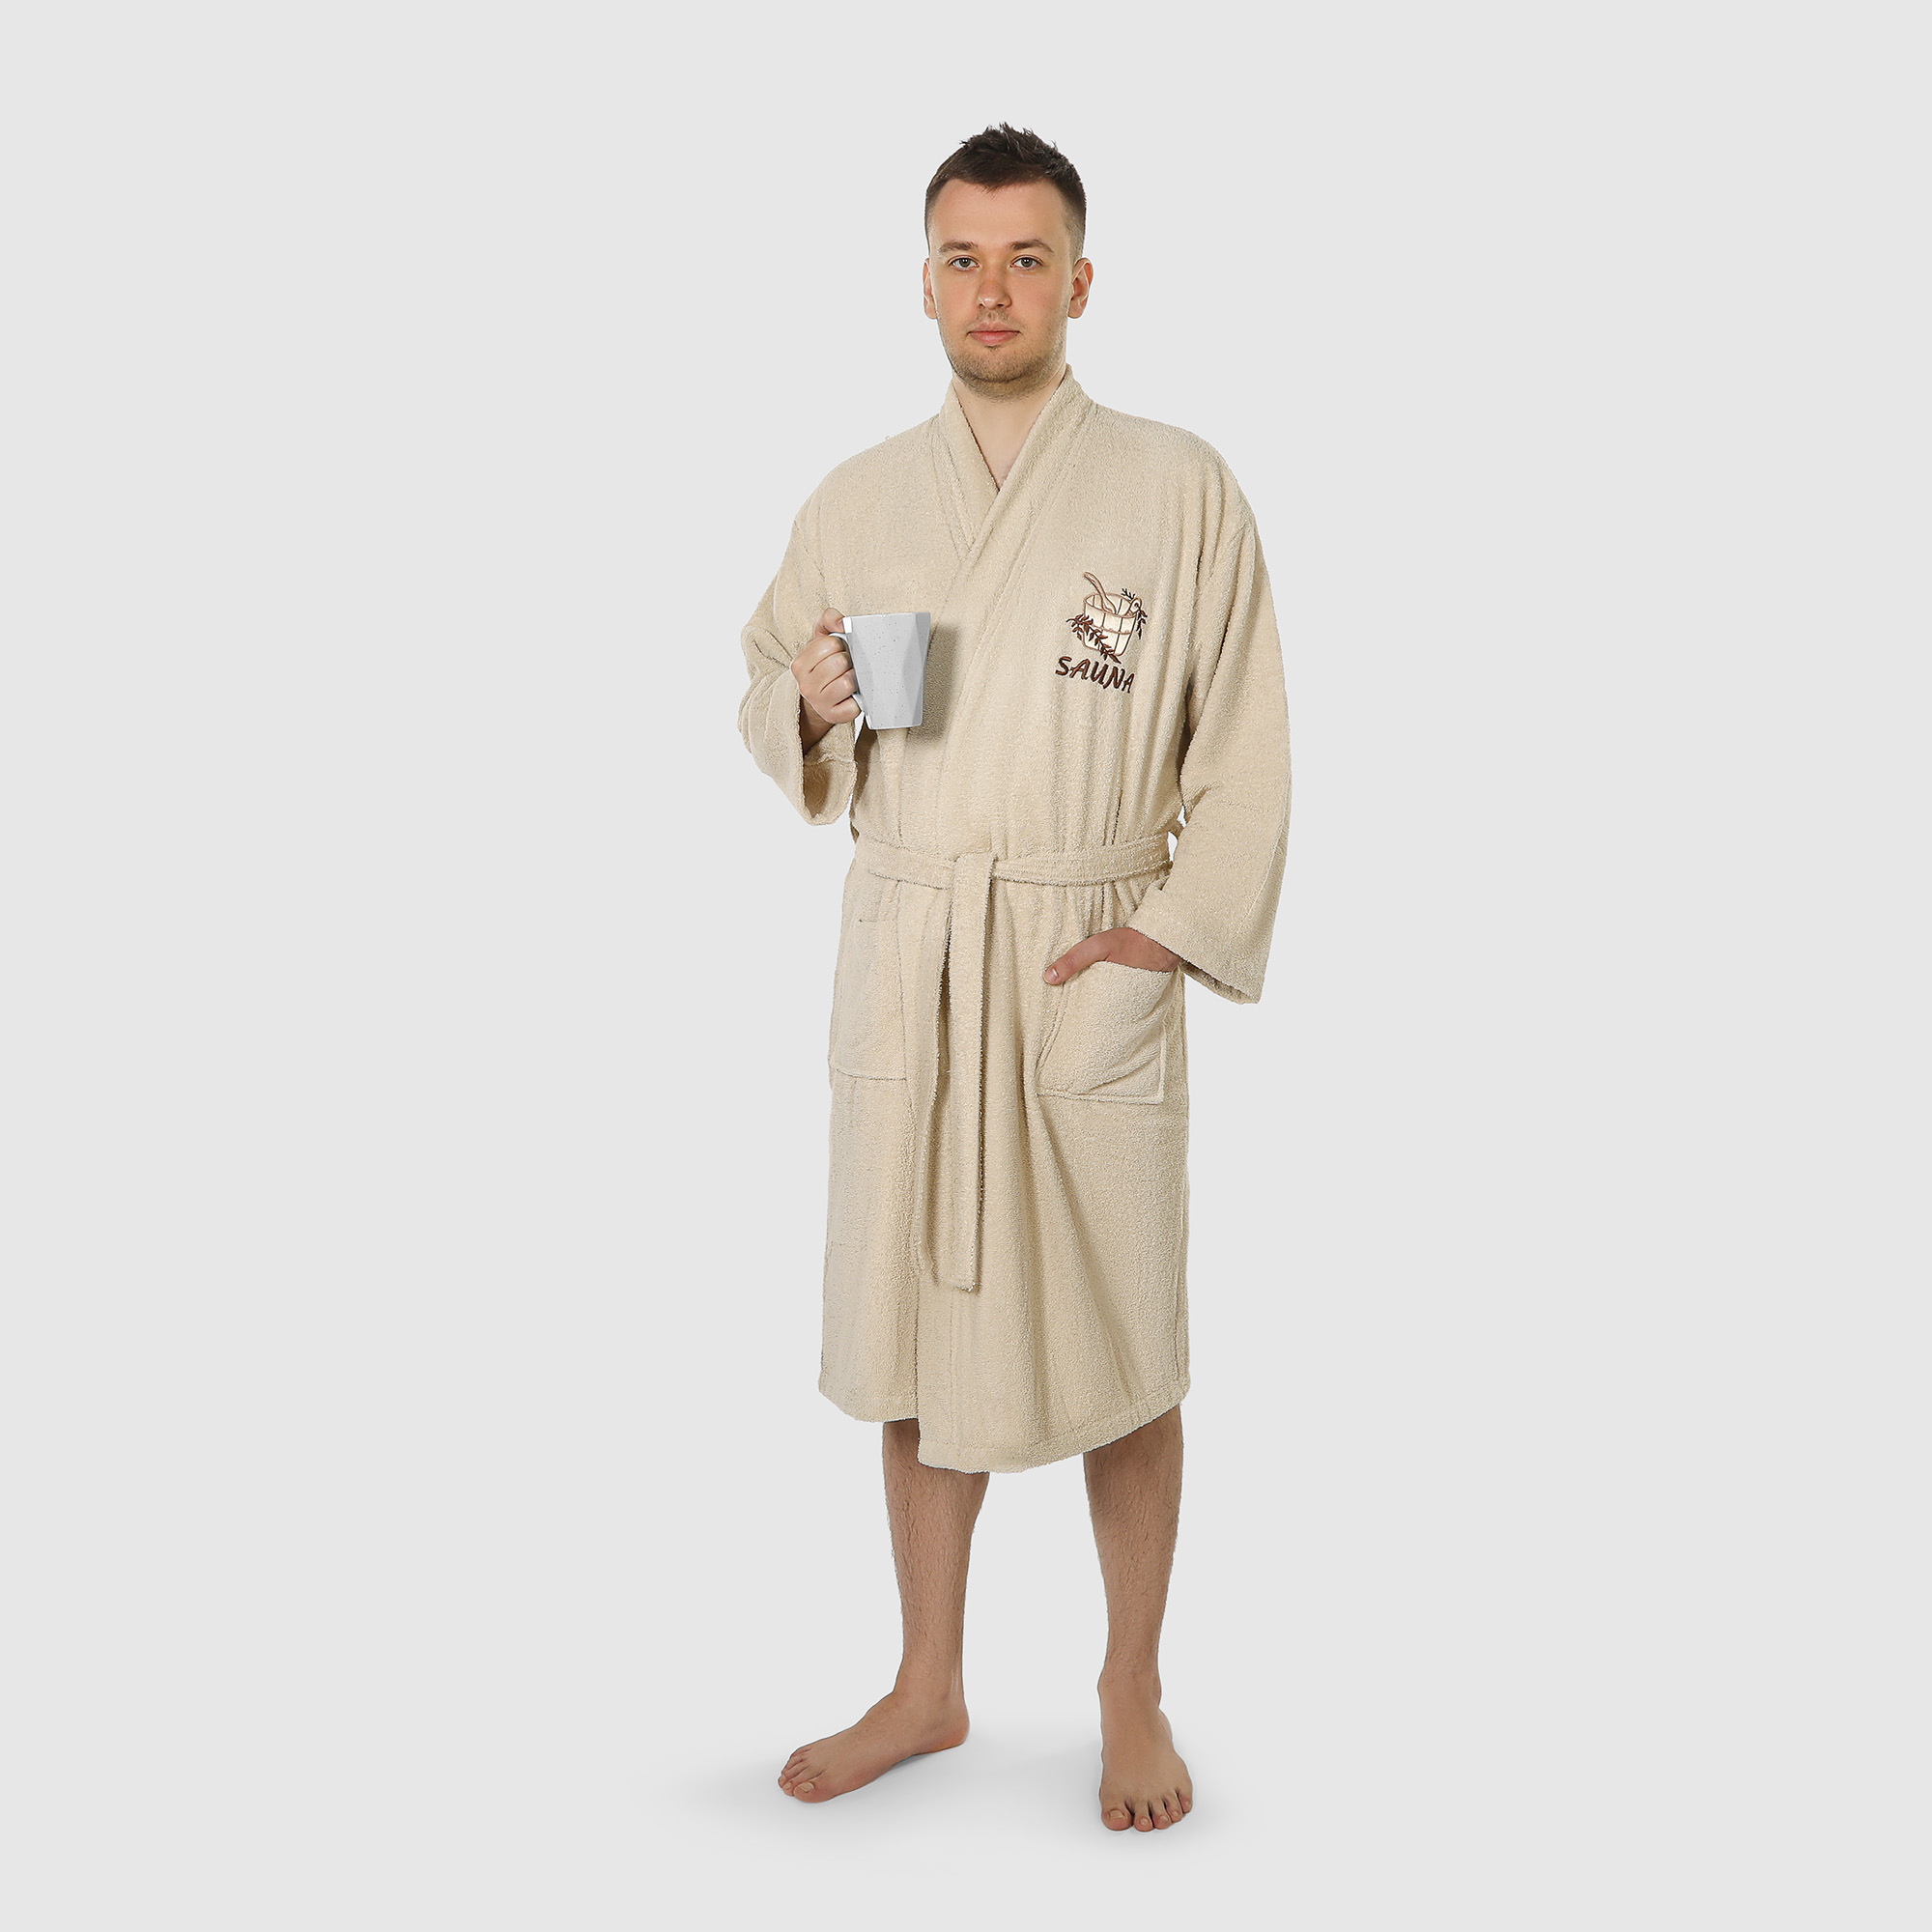 Халат мужской махровый Asil Sauna Kimono brown XL халат мужской asil sauna brown xxl махровый с капюшоном